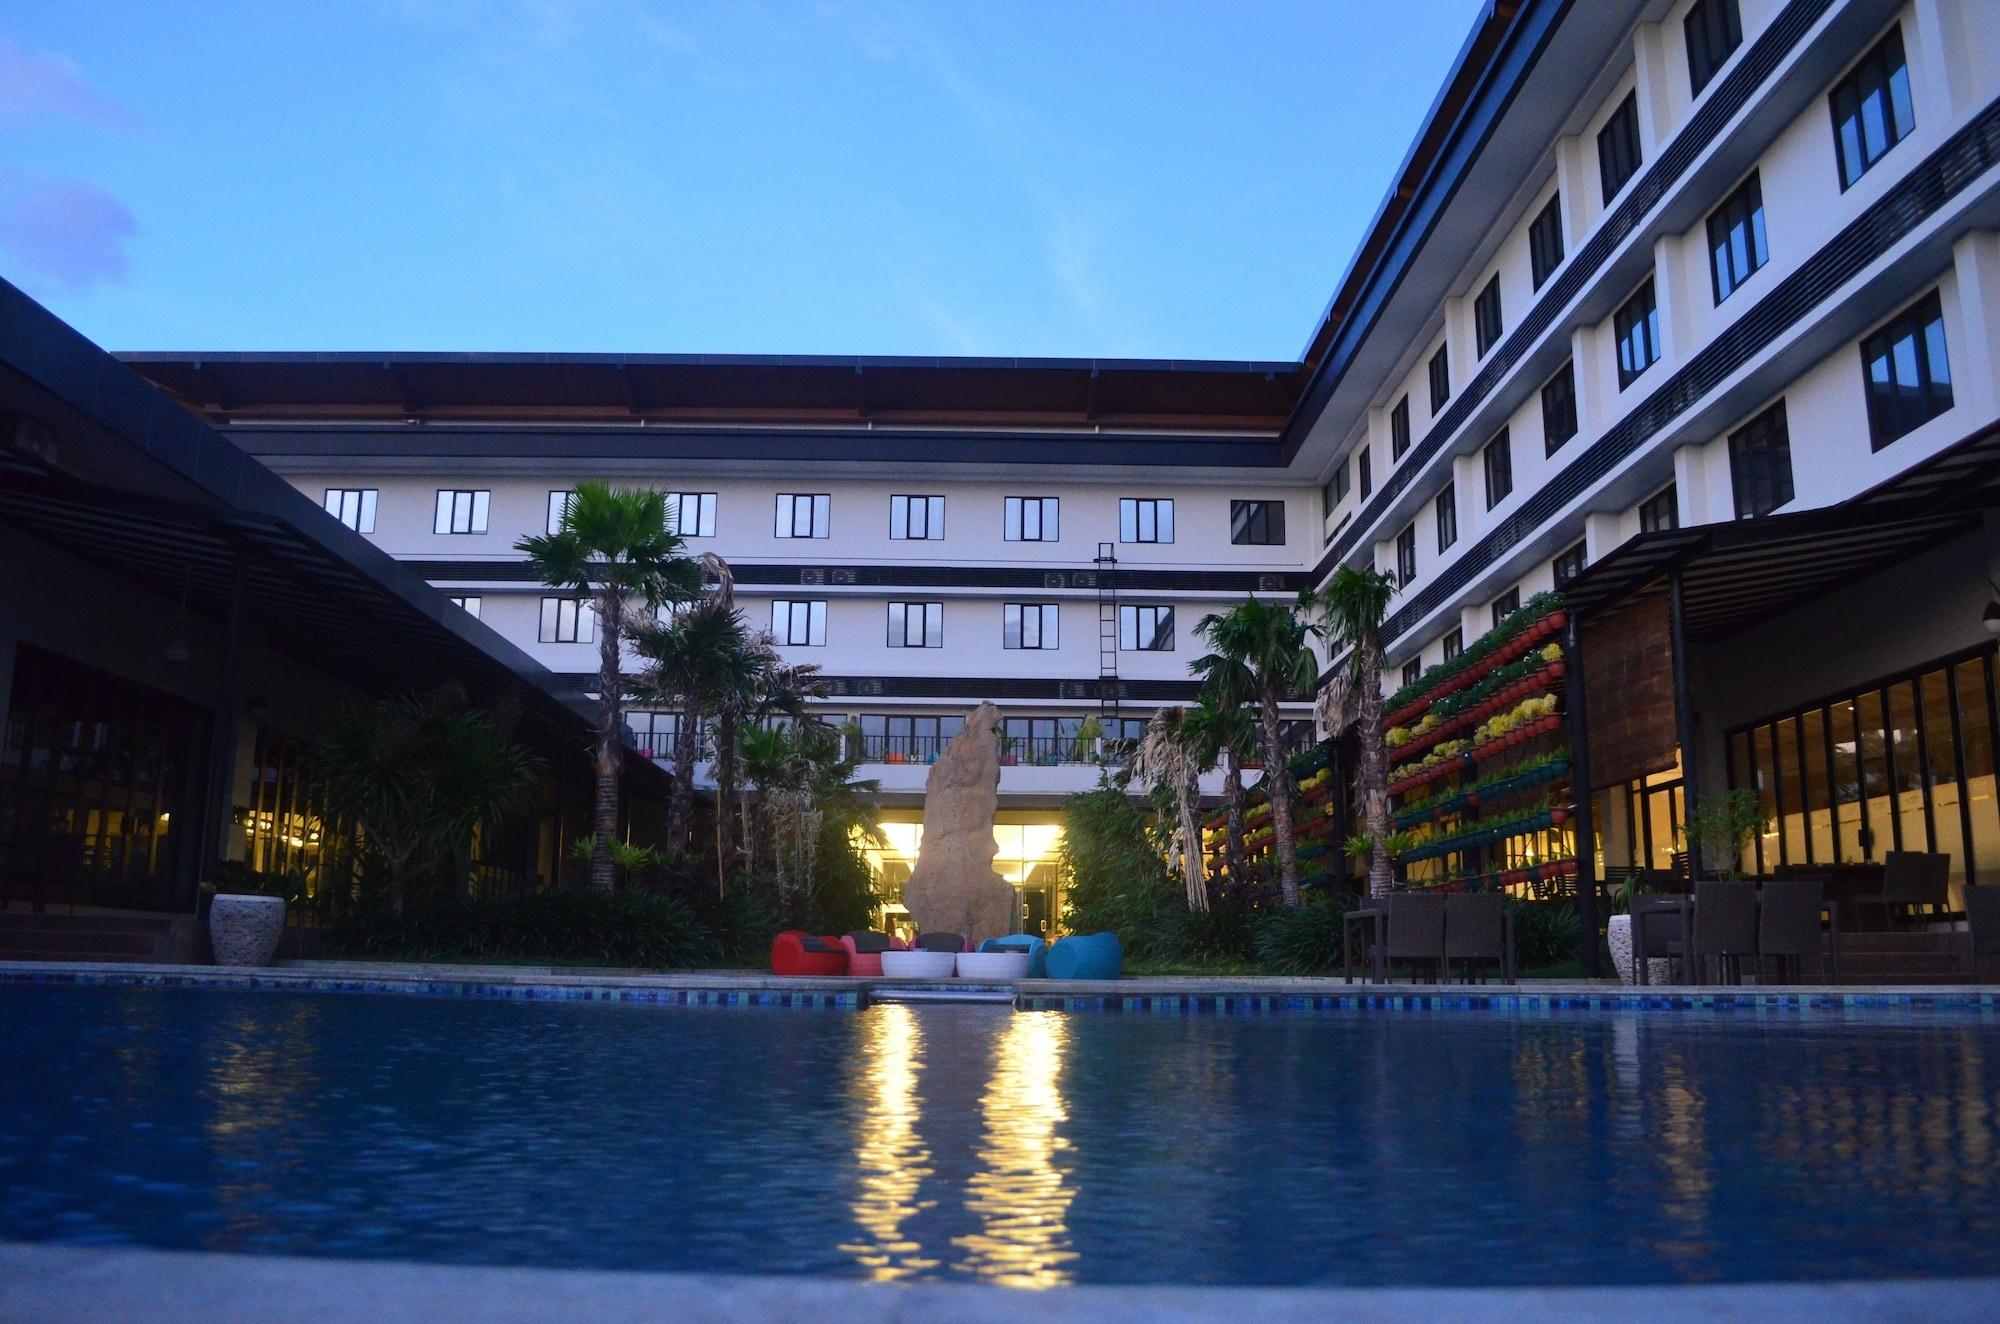 Hotel Neo Eltari Kupang By Aston Exterior foto